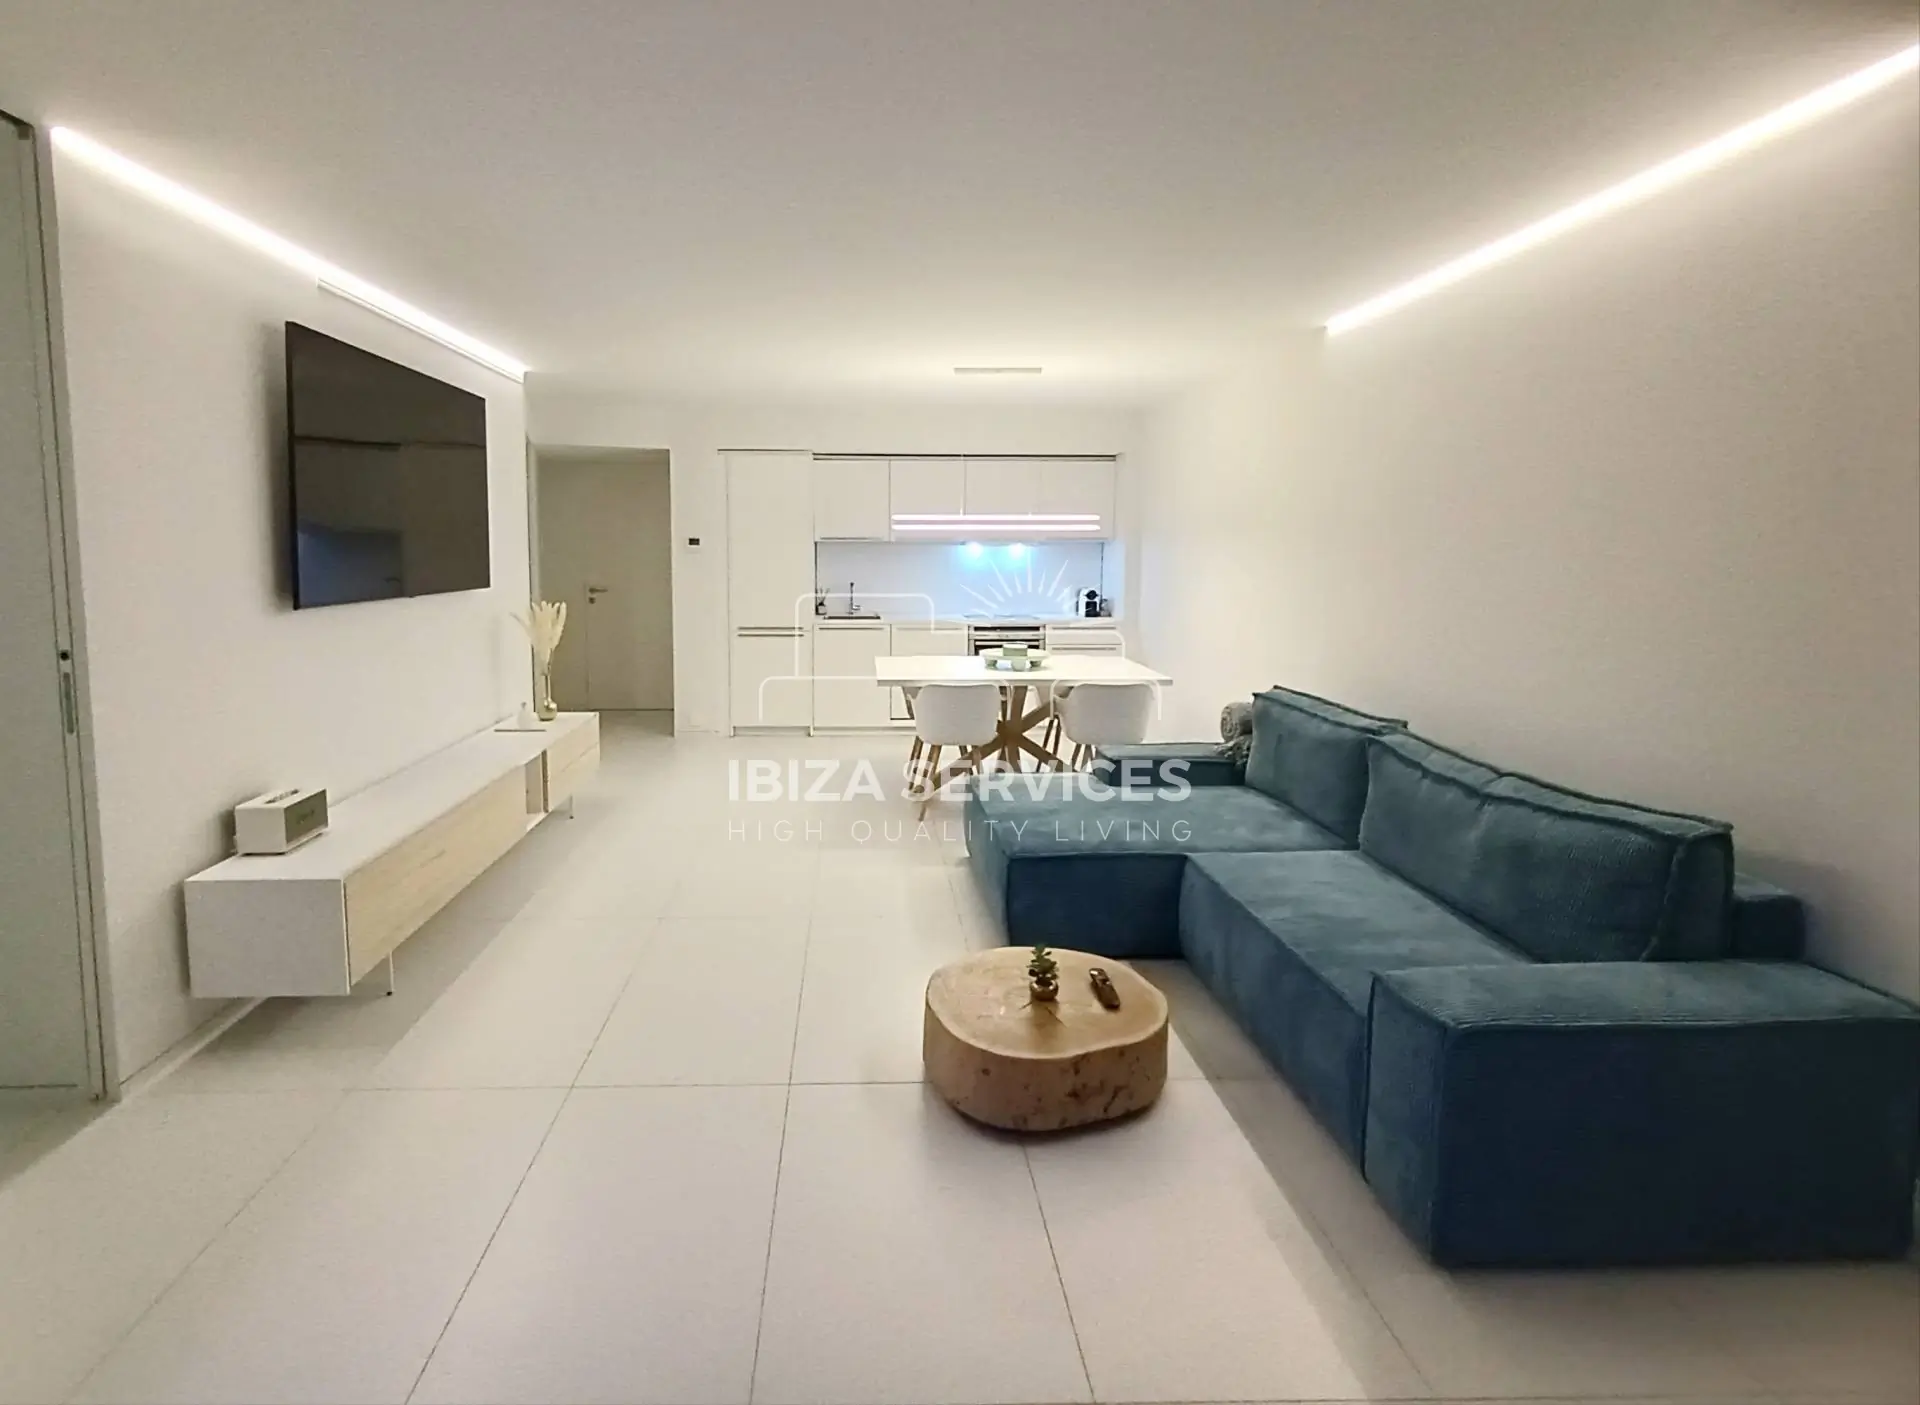 Seizoensverhuur Patio Blanco – Luxe 2 slaapkamers, 2 badkamers